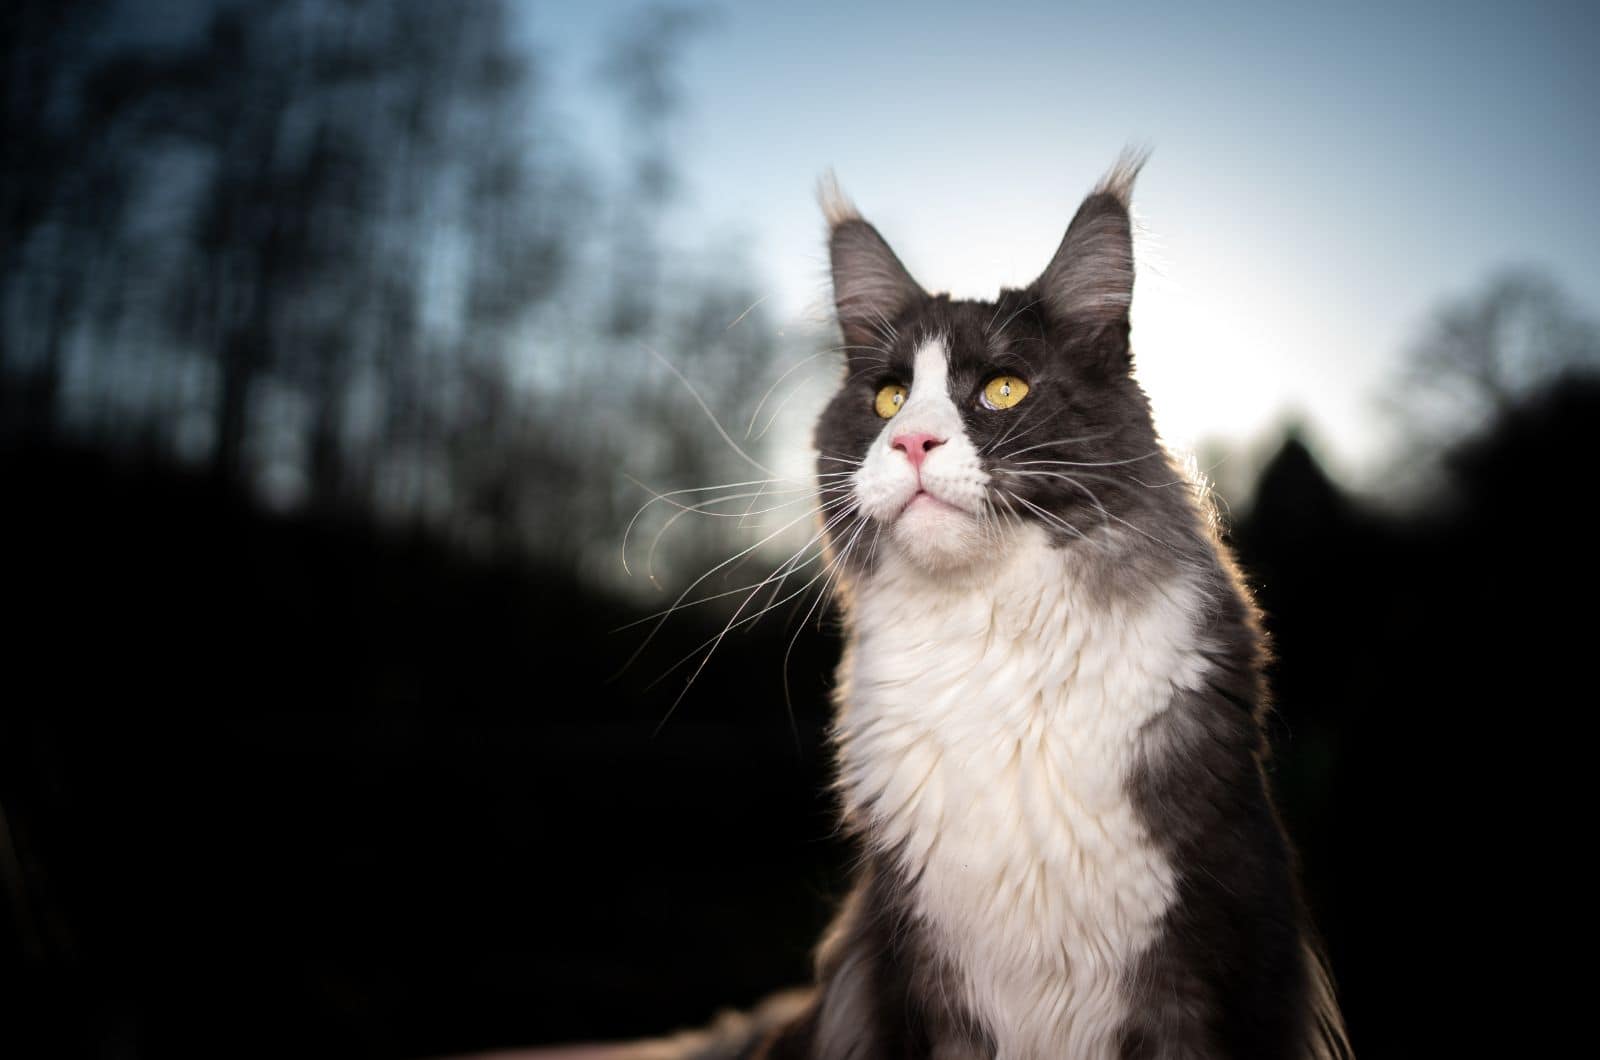 Fat Tuxedo Cat posing for camera